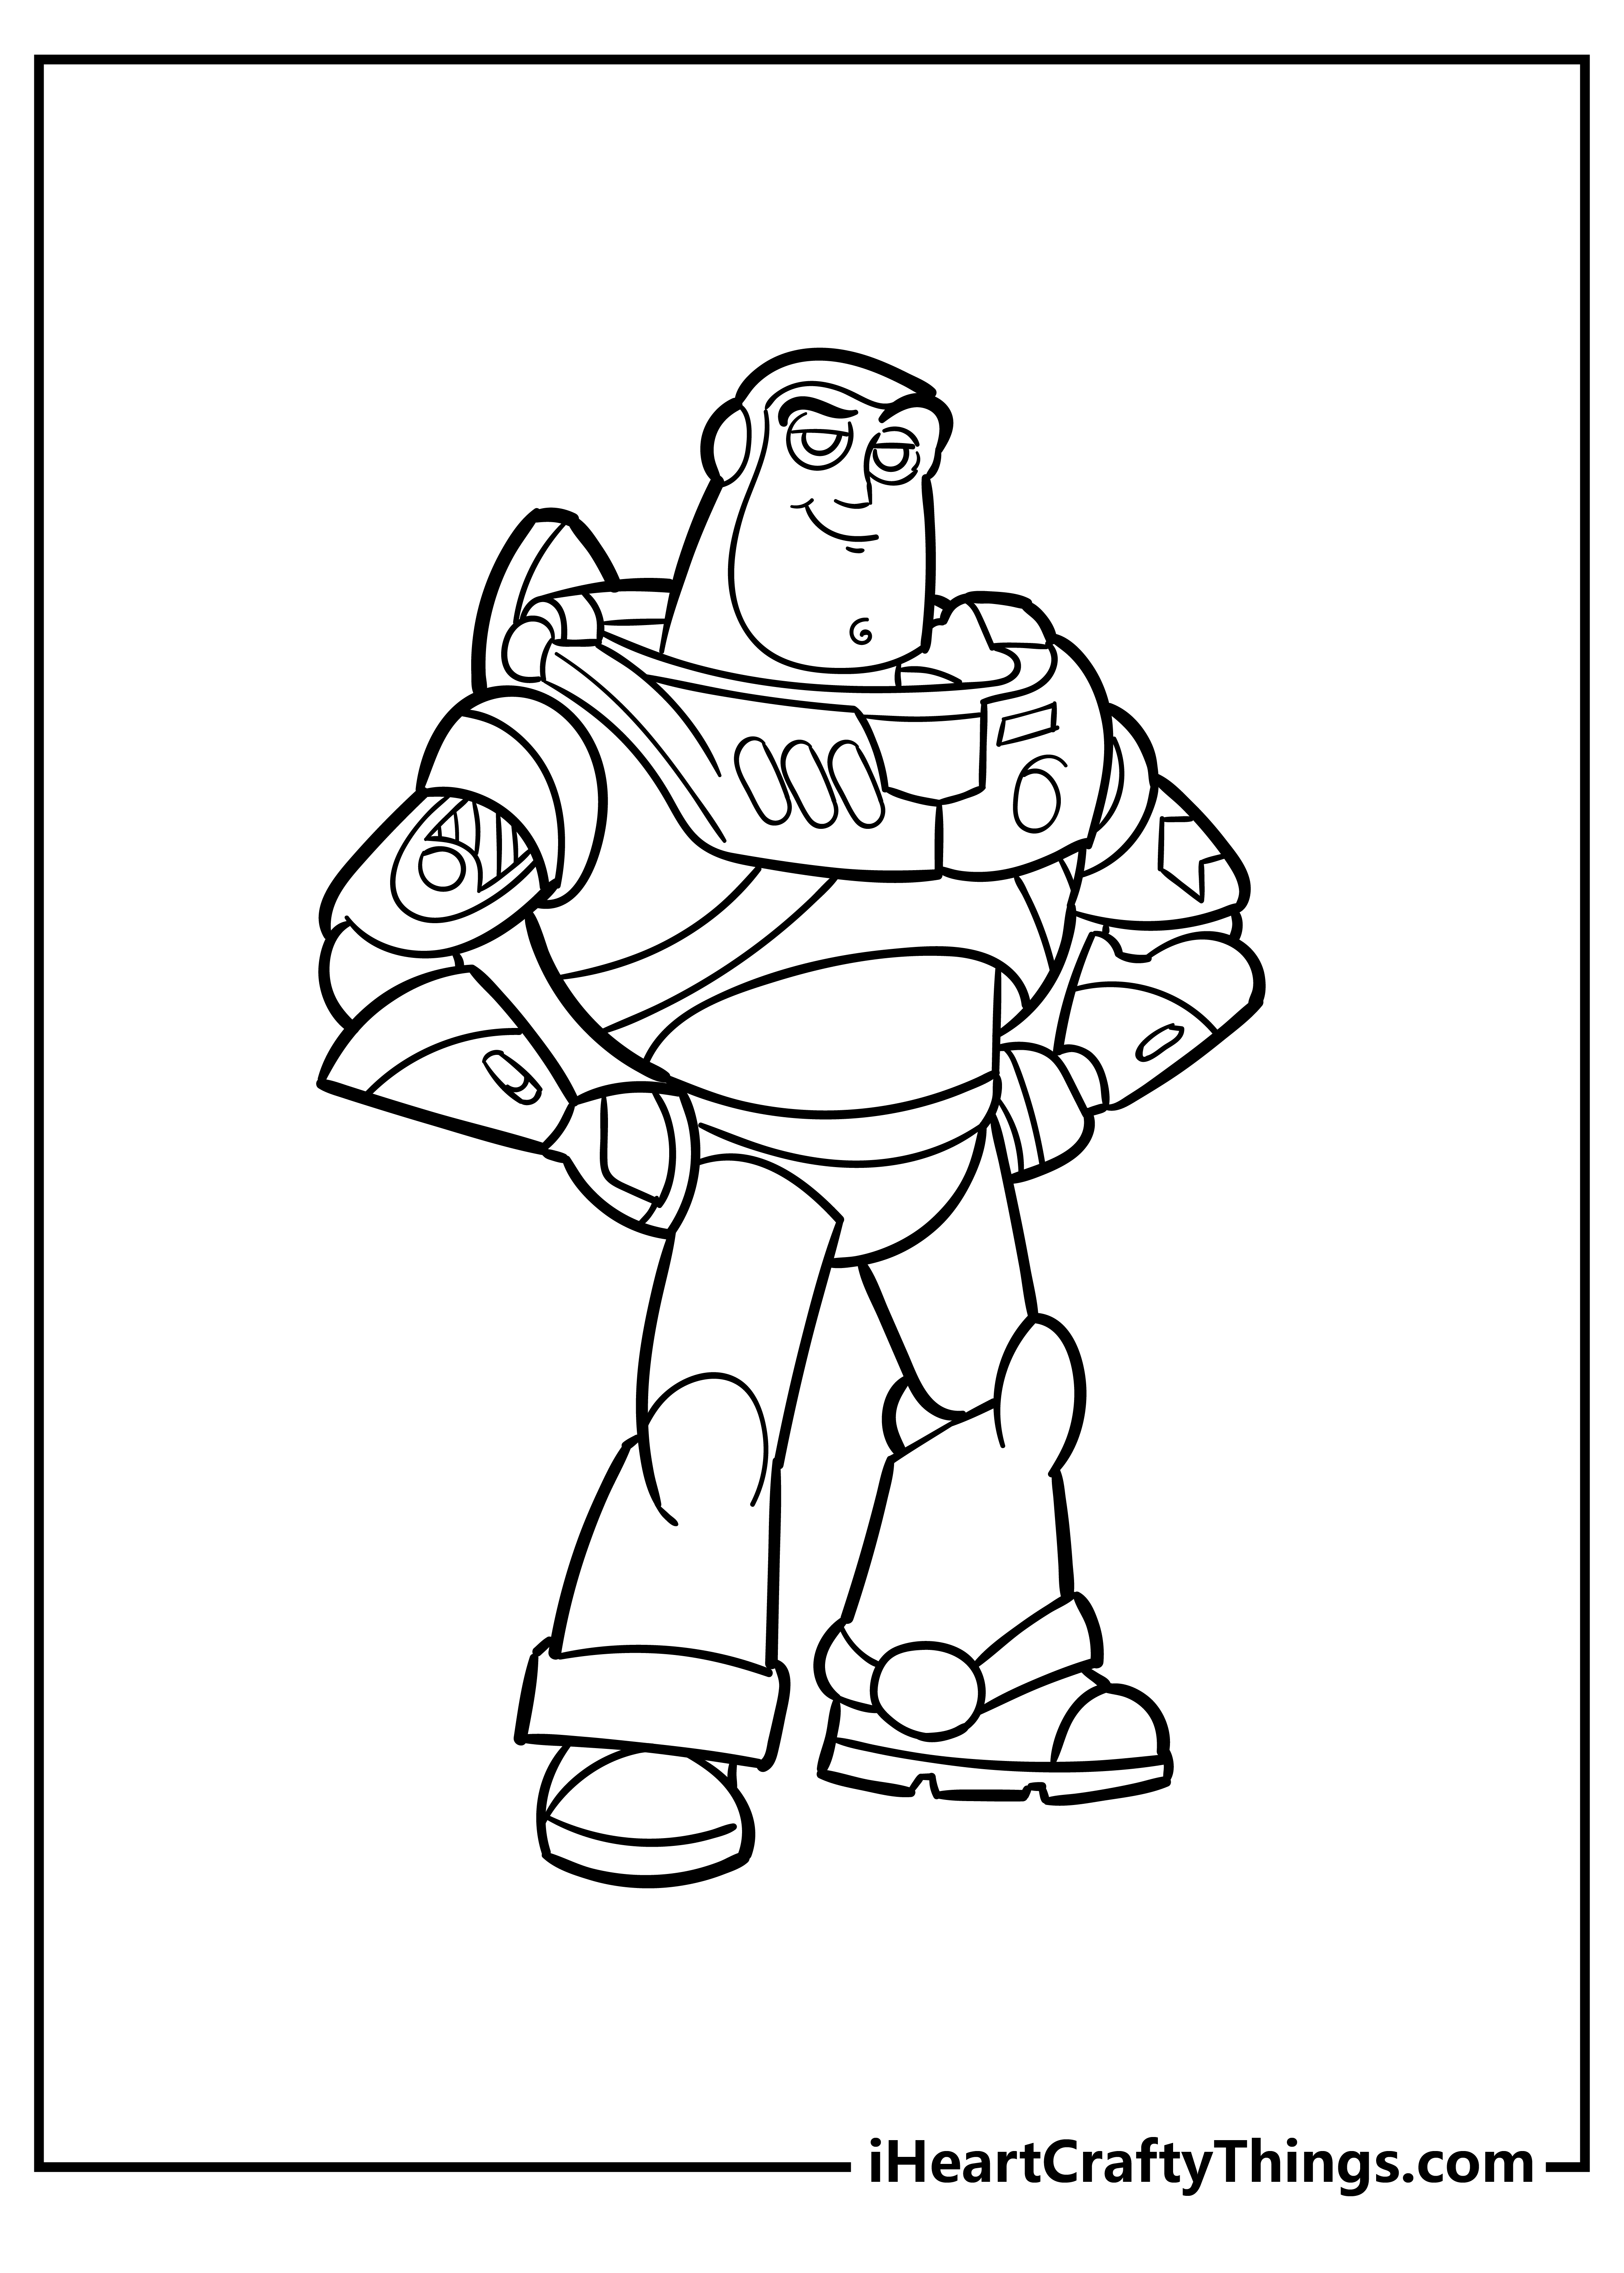 Buzz Lightyear Cartoon Coloring Original Sheet for children free download